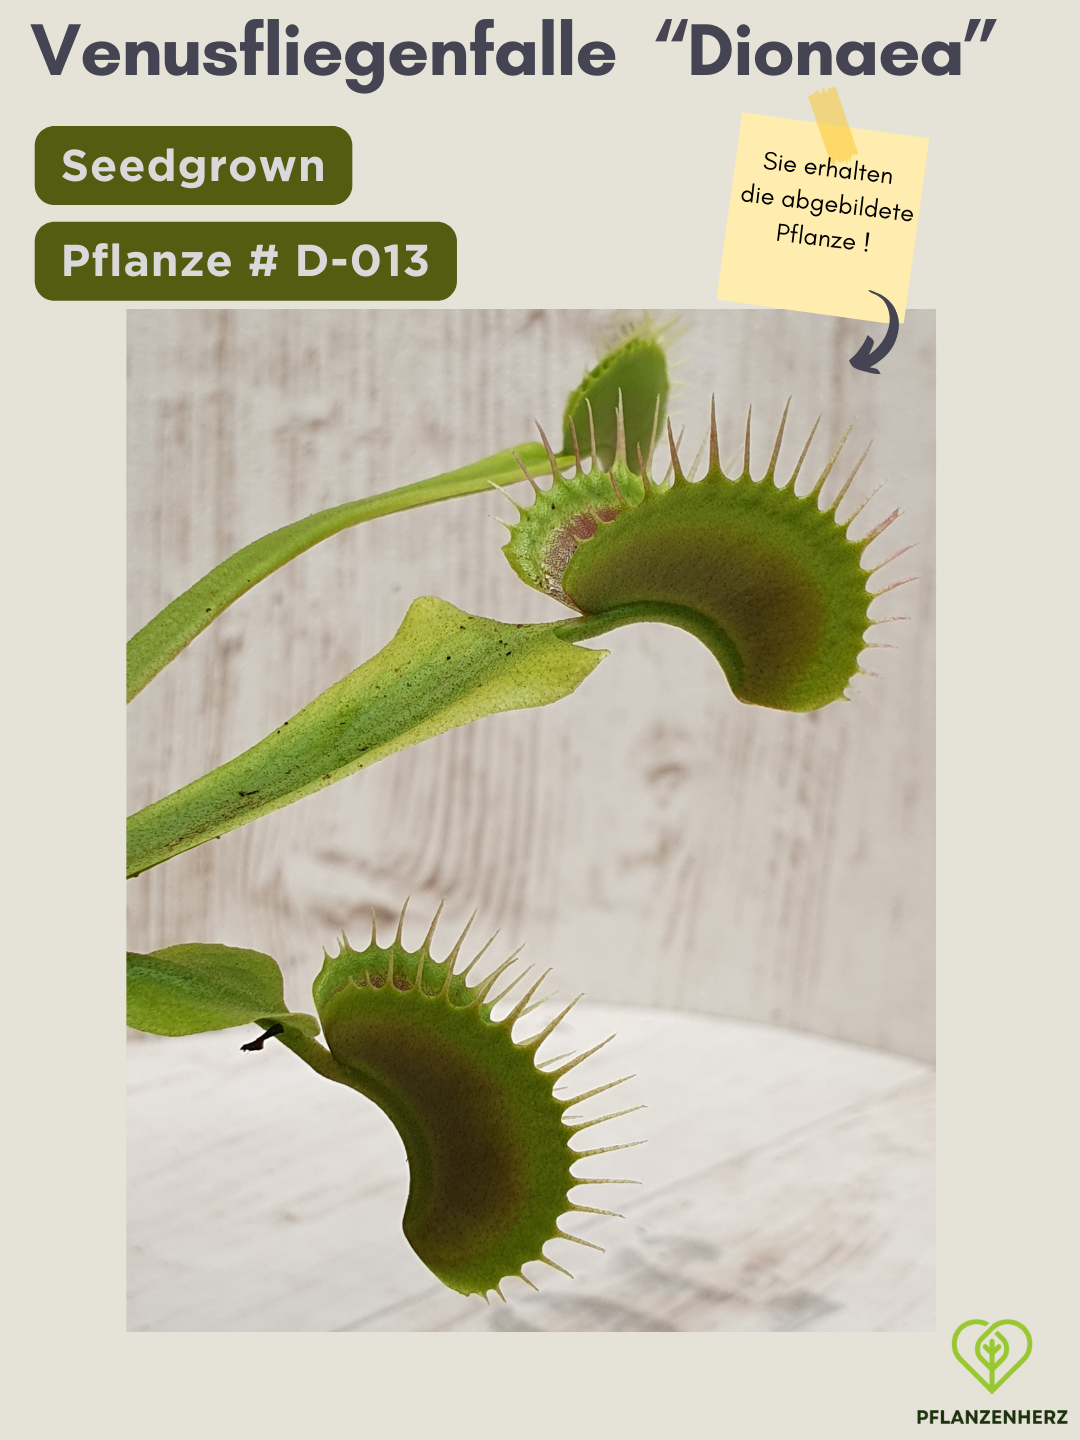 Venusfliegenfalle "Dionaea muscipula" Karnivoren, getopft 7x7cm, #D-013